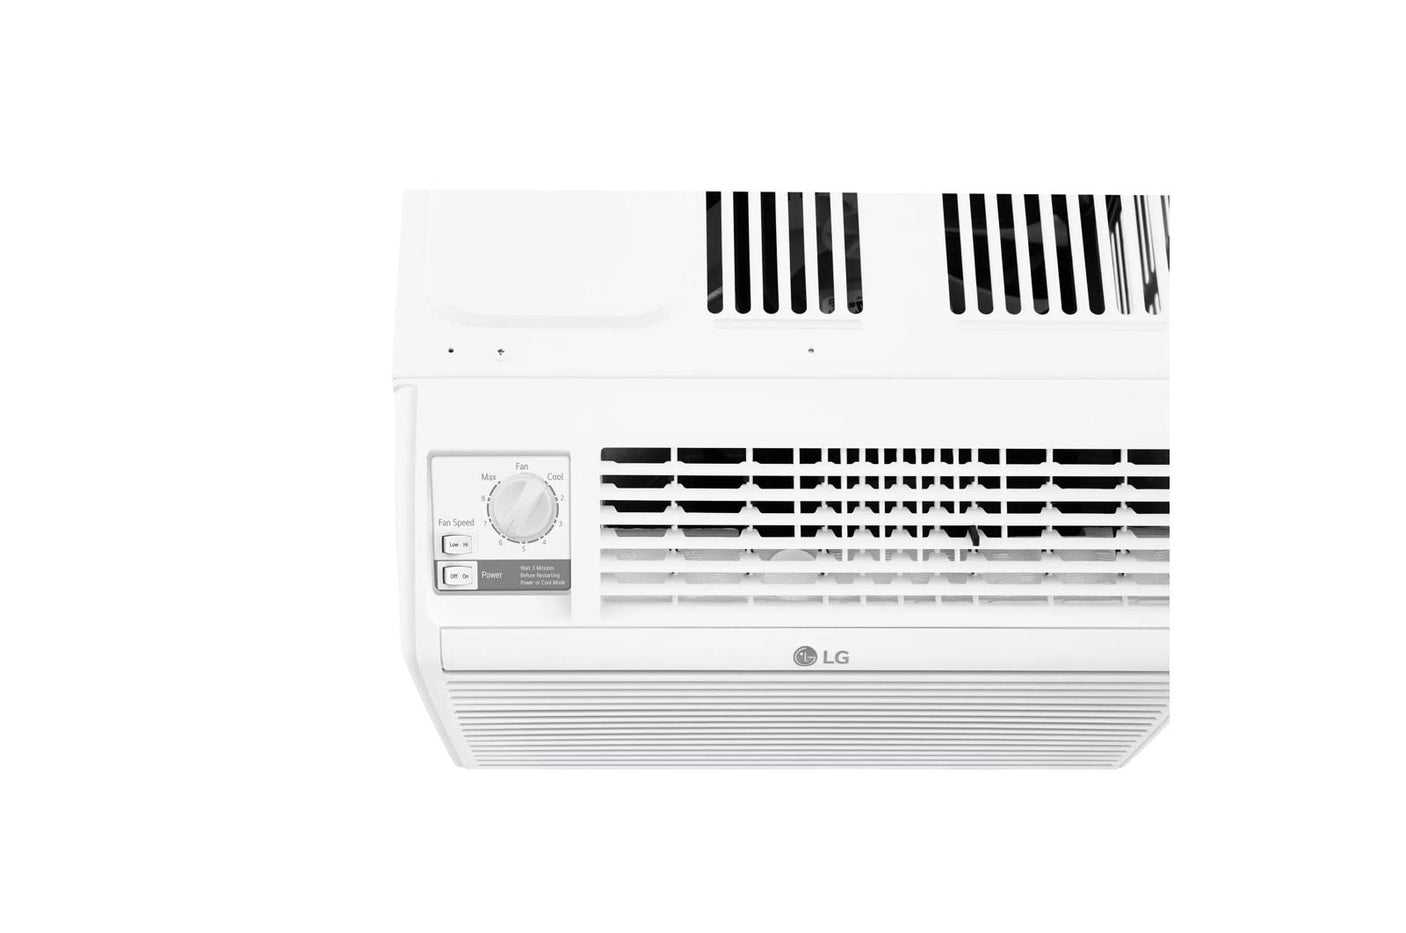 5,000 BTU Window Air Conditioner